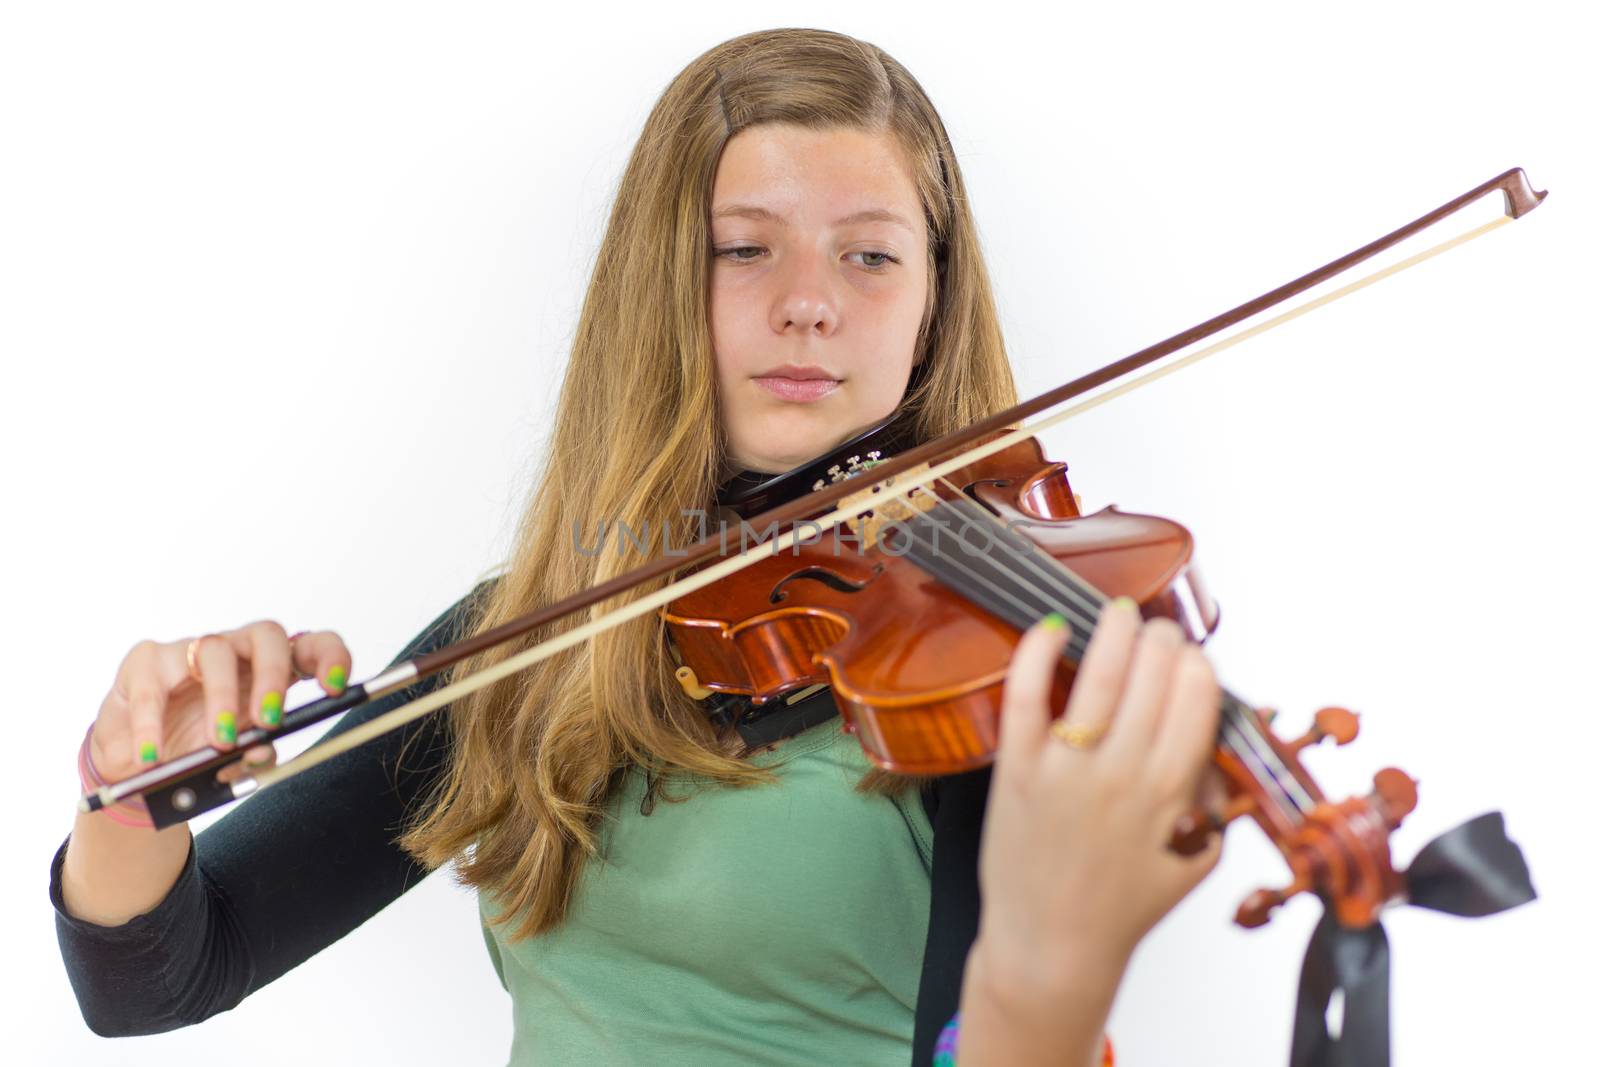 European teenage girl playing violin by BenSchonewille